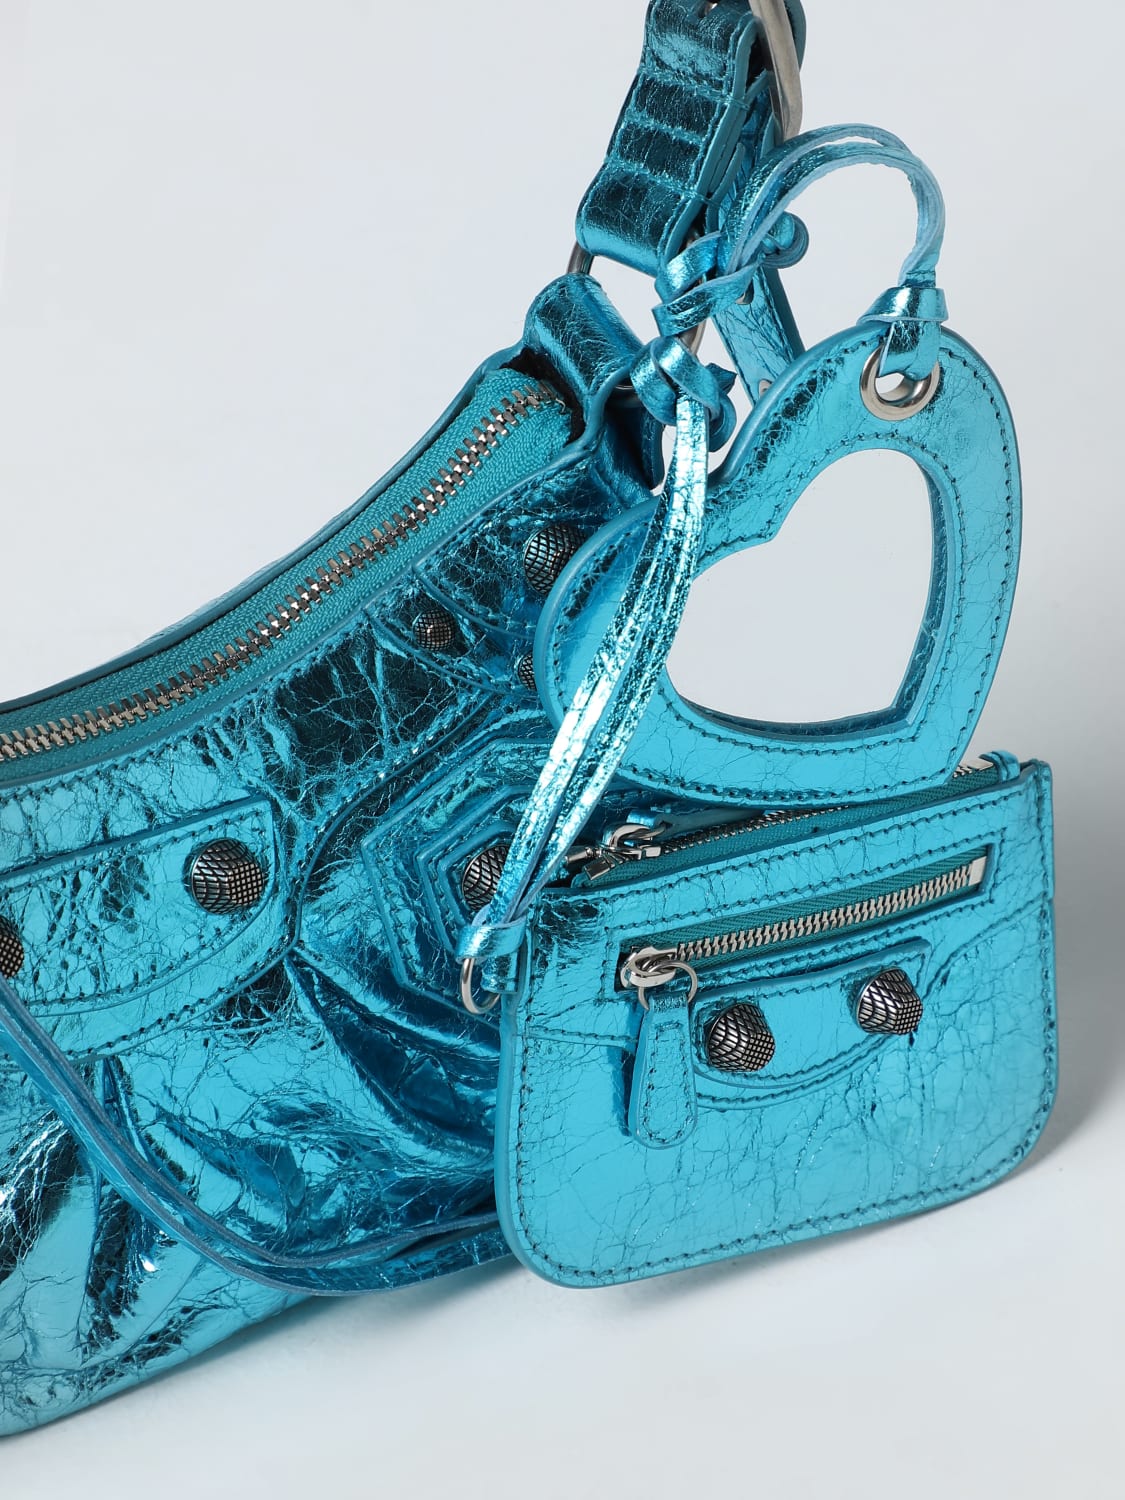 BALENCIAGA: Le bag in laminated leather - Blue | Balenciaga shoulder bag 6713090GT3Y online on GIGLIO.COM